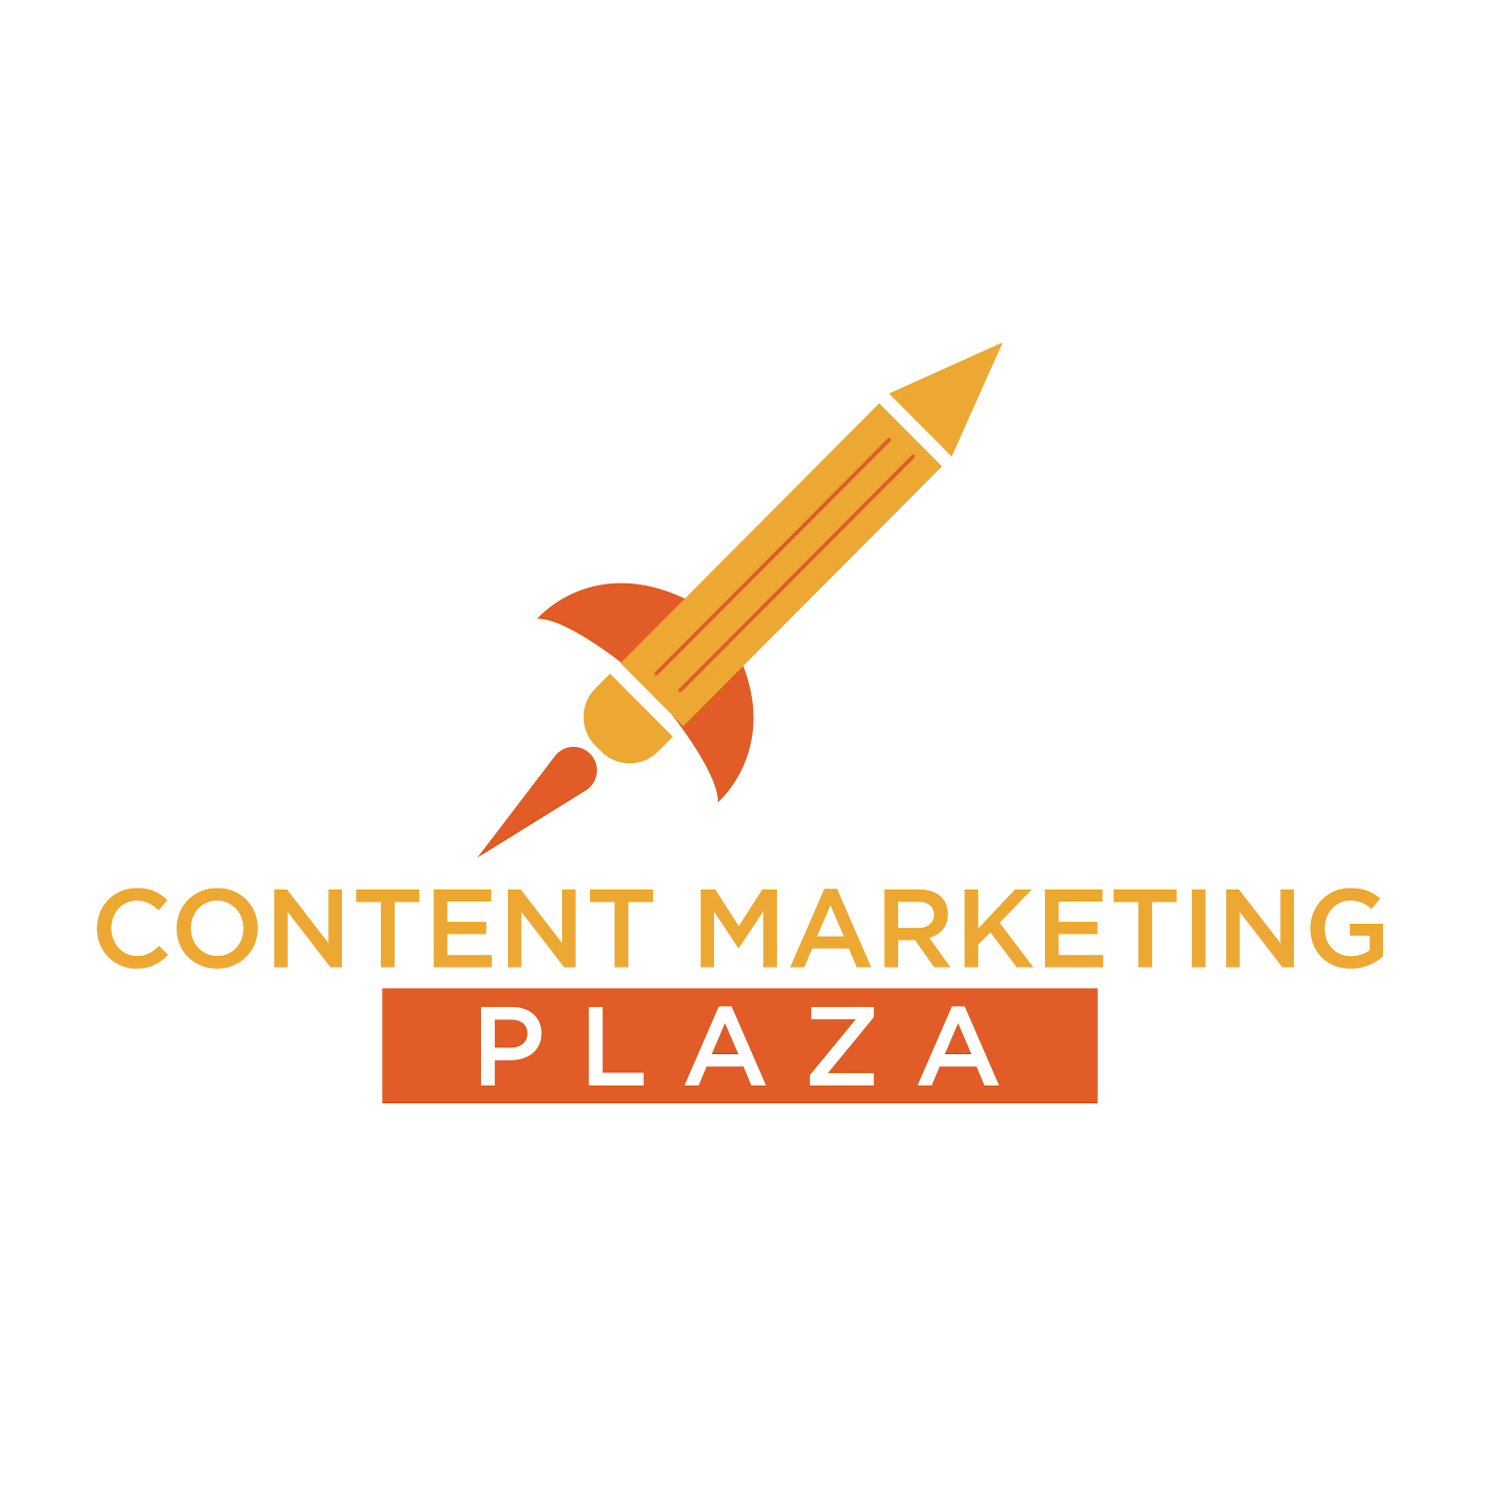 Content Marketing Plaza